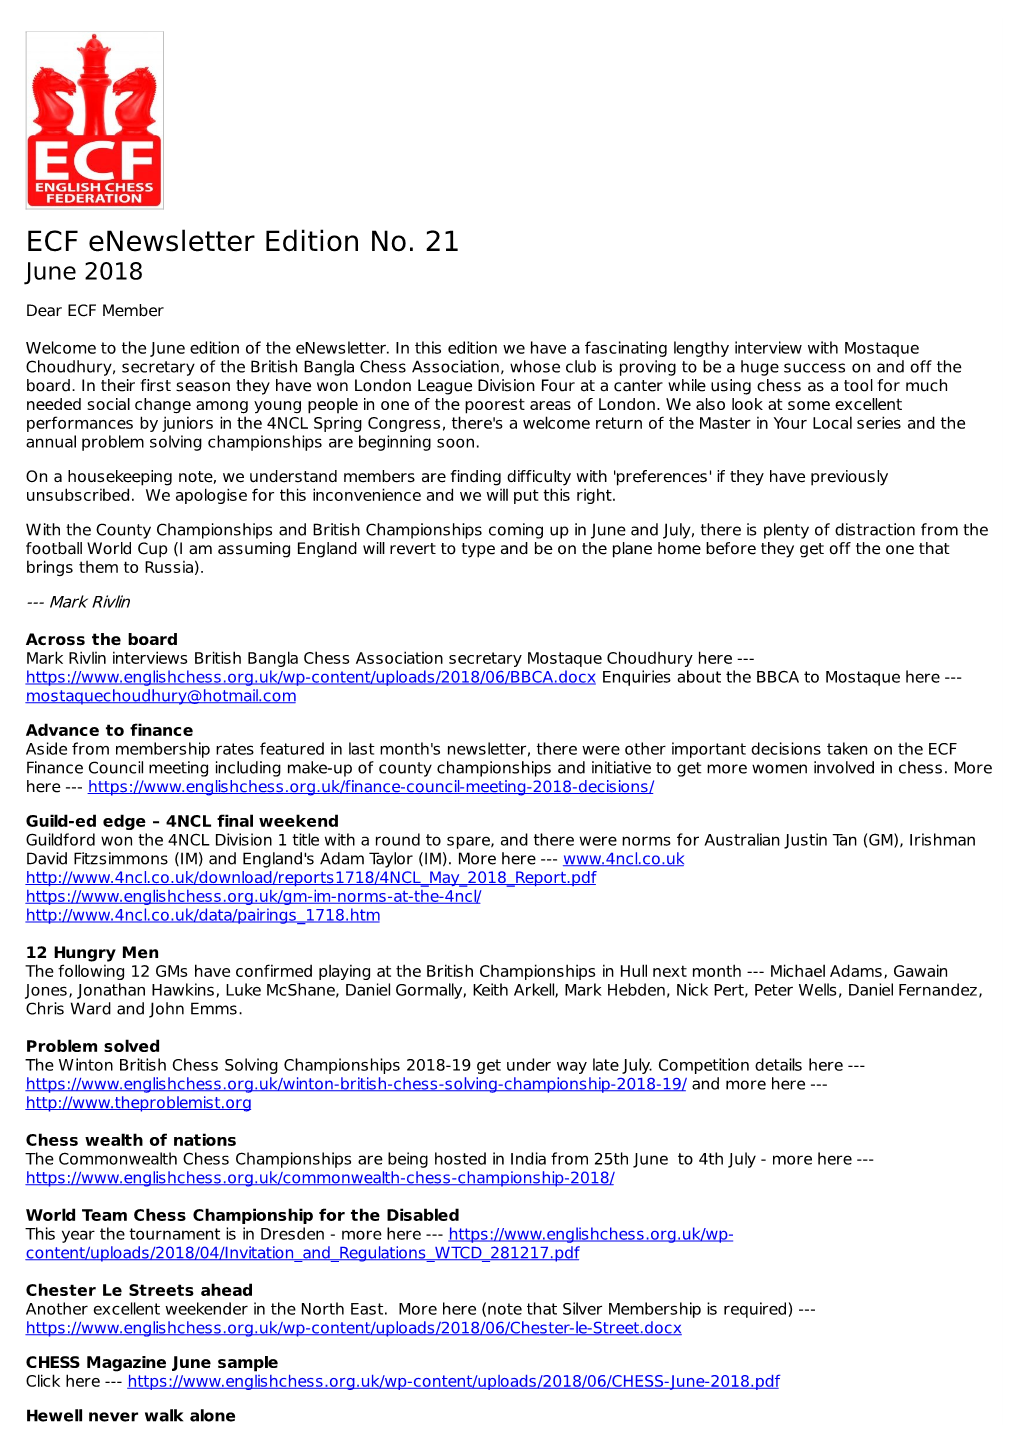 ECF Enewsletter Edition No. 21 June 2018